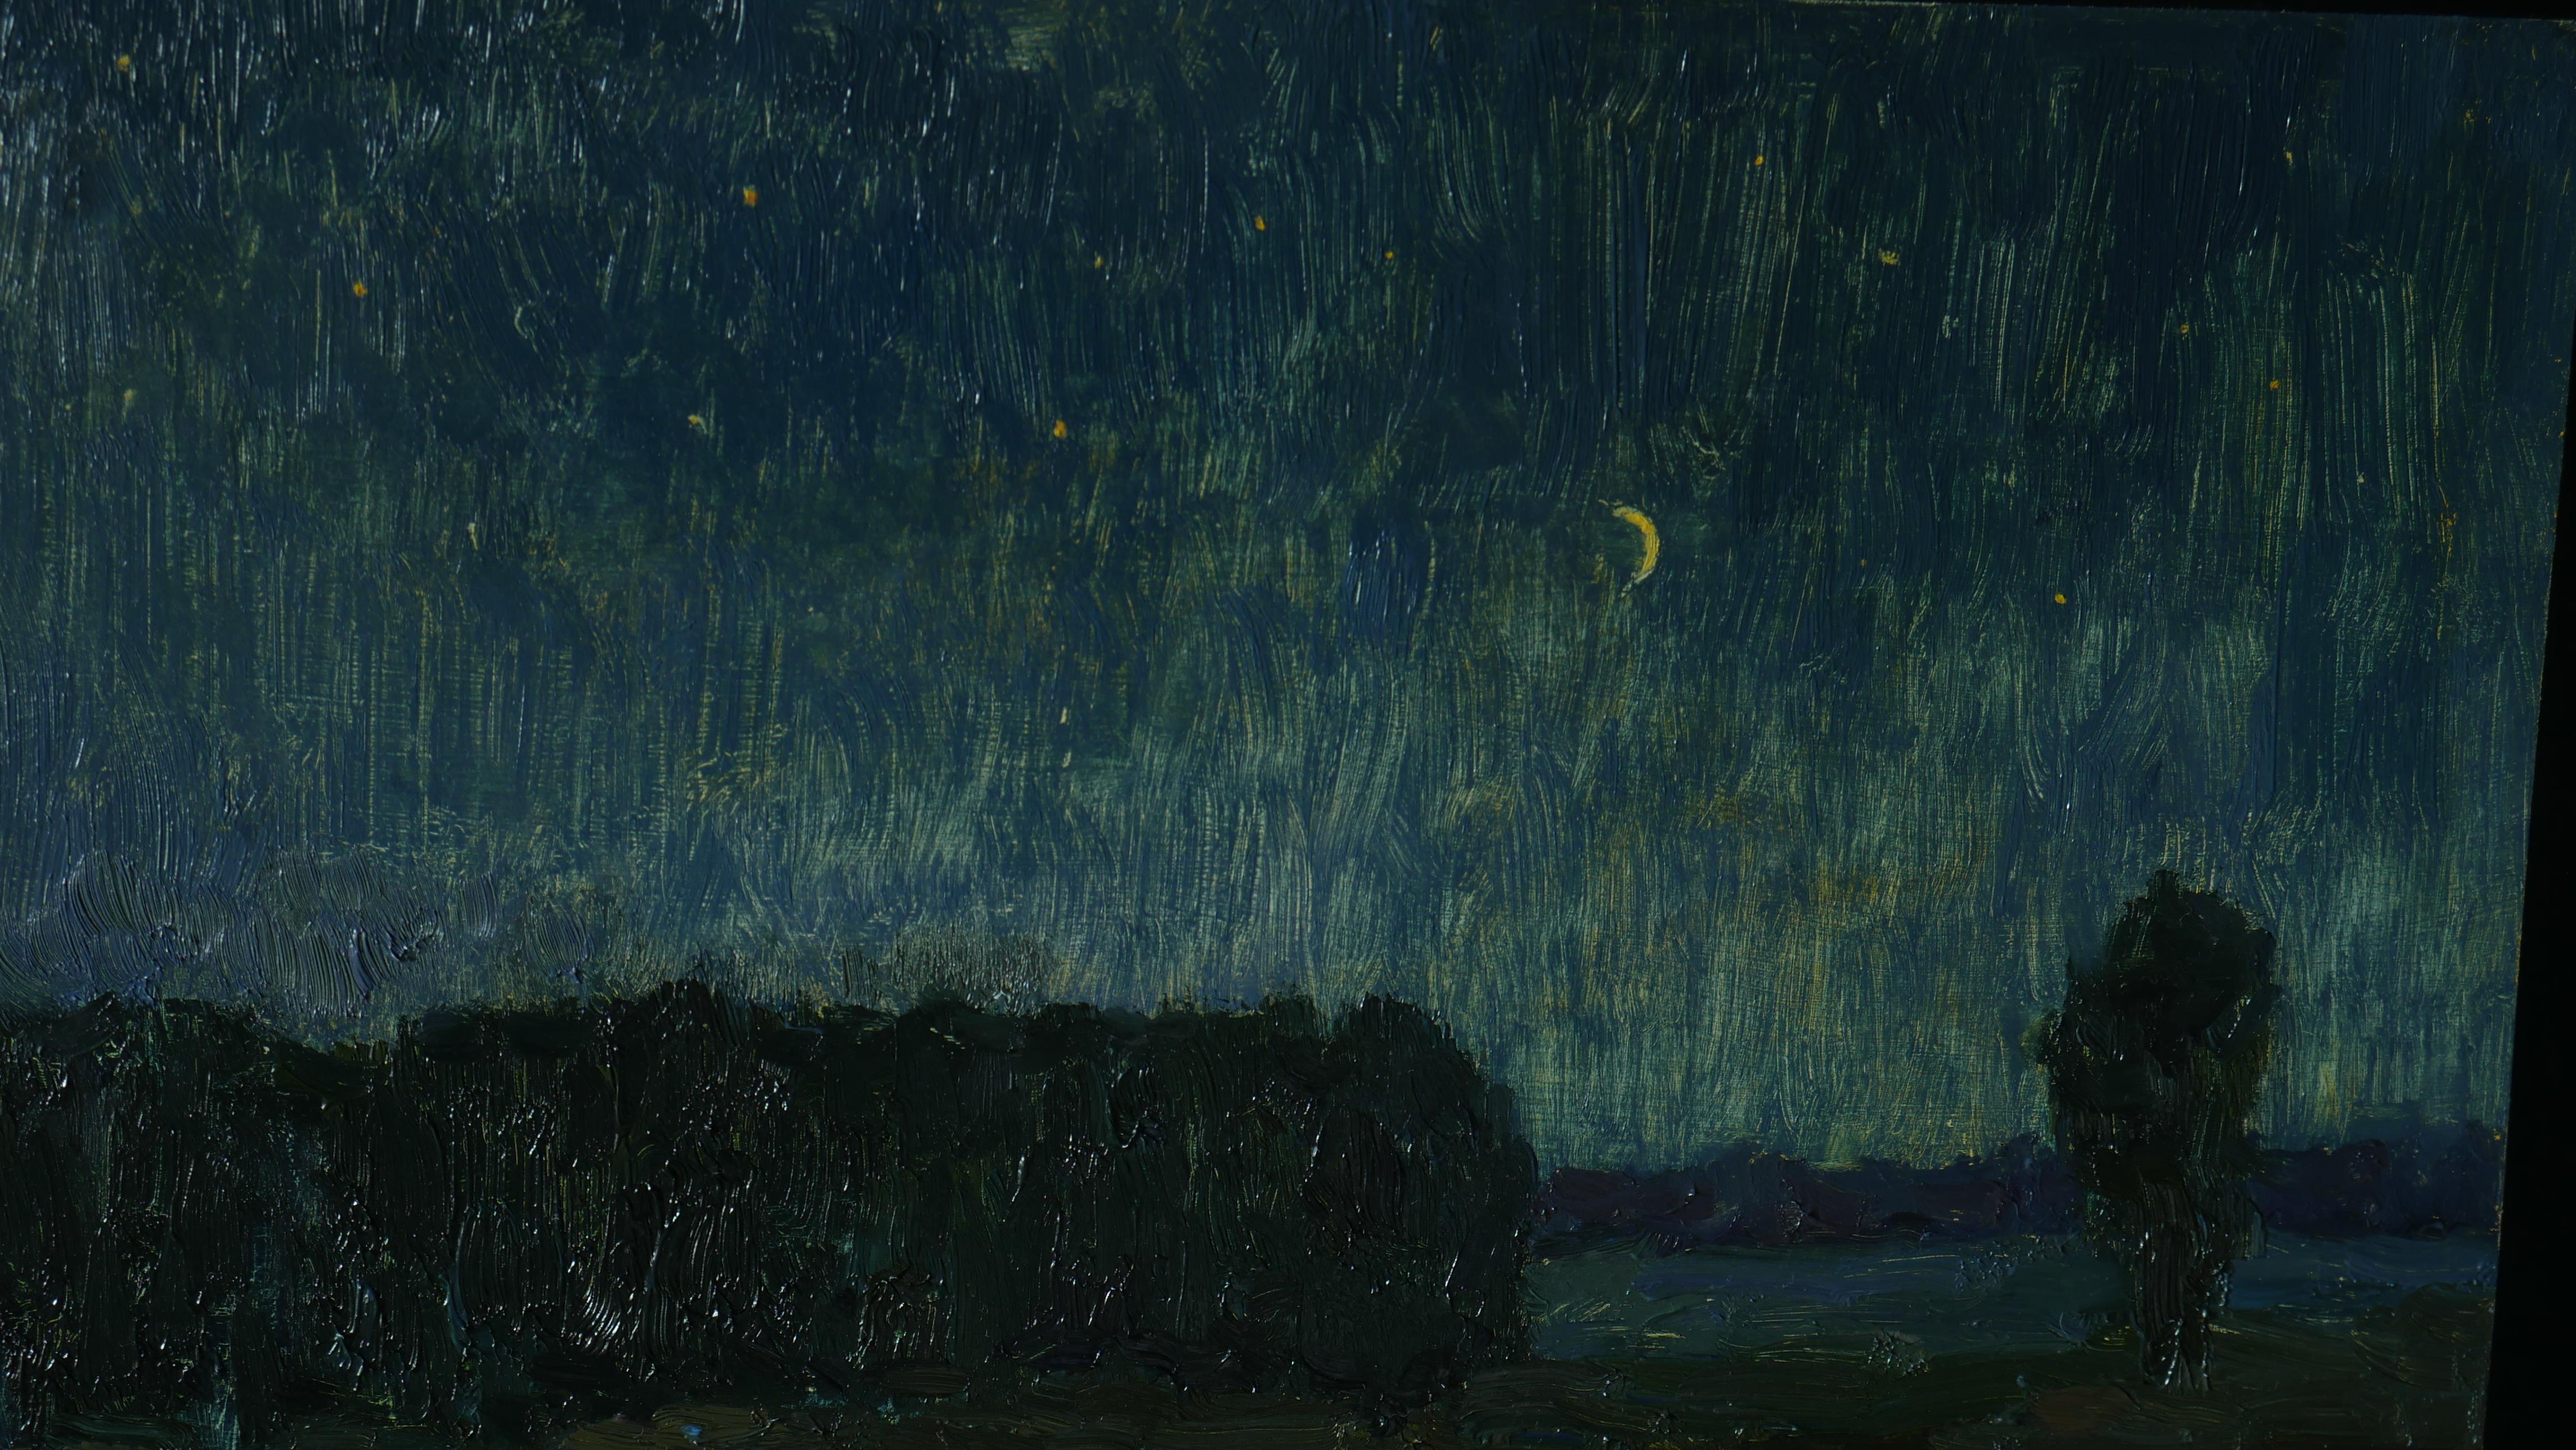 The Deep Night - night painting - Impressionist Painting by Nikolay Dmitriev